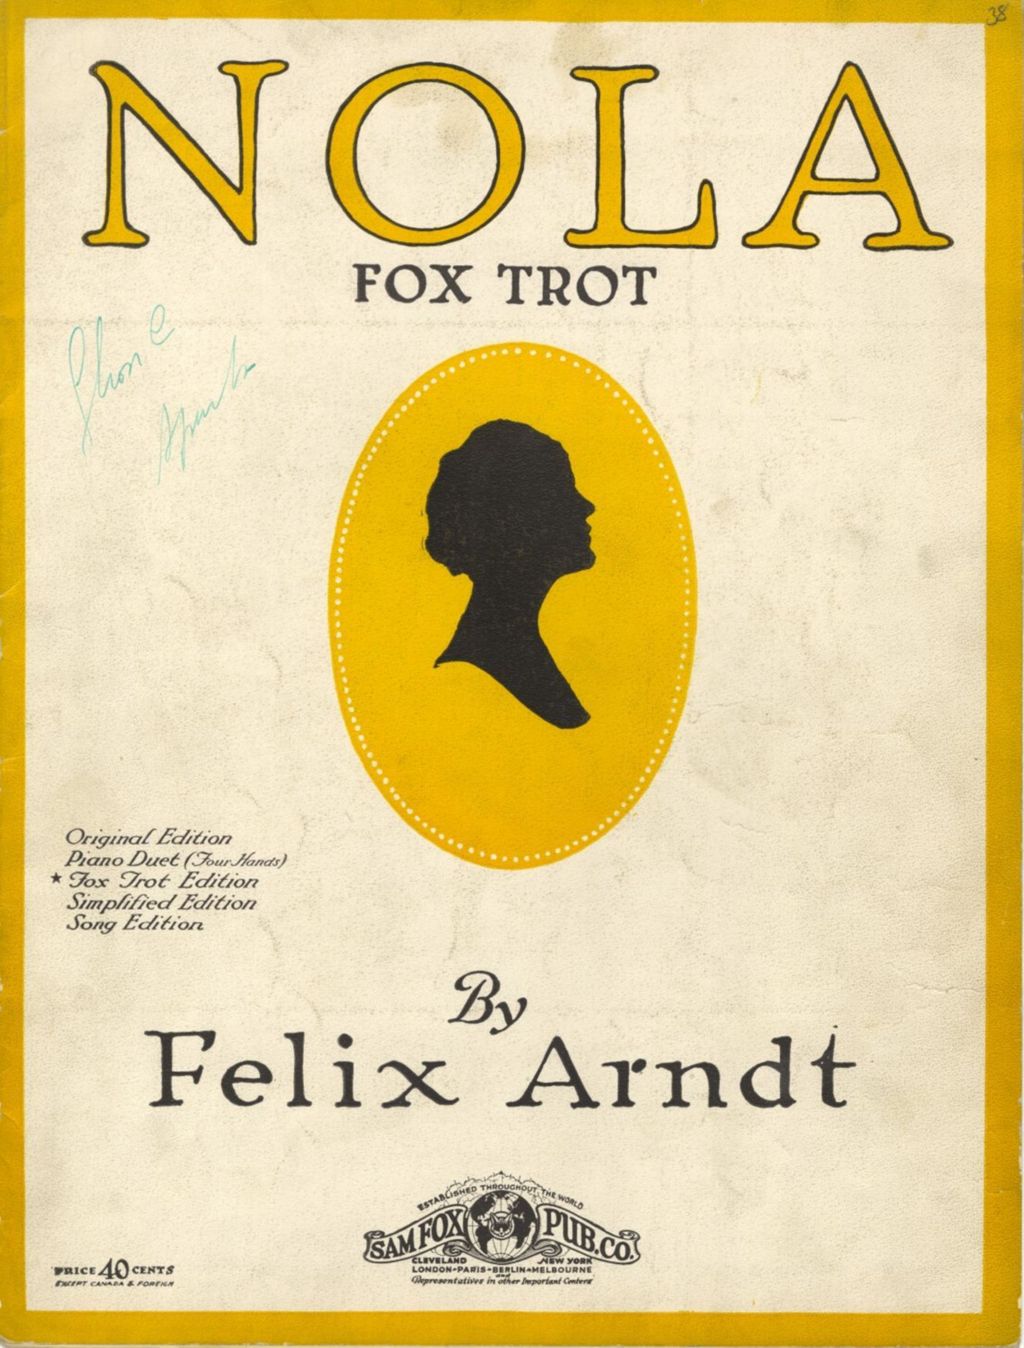 Miniature of Nola (Fox Trot Edition)